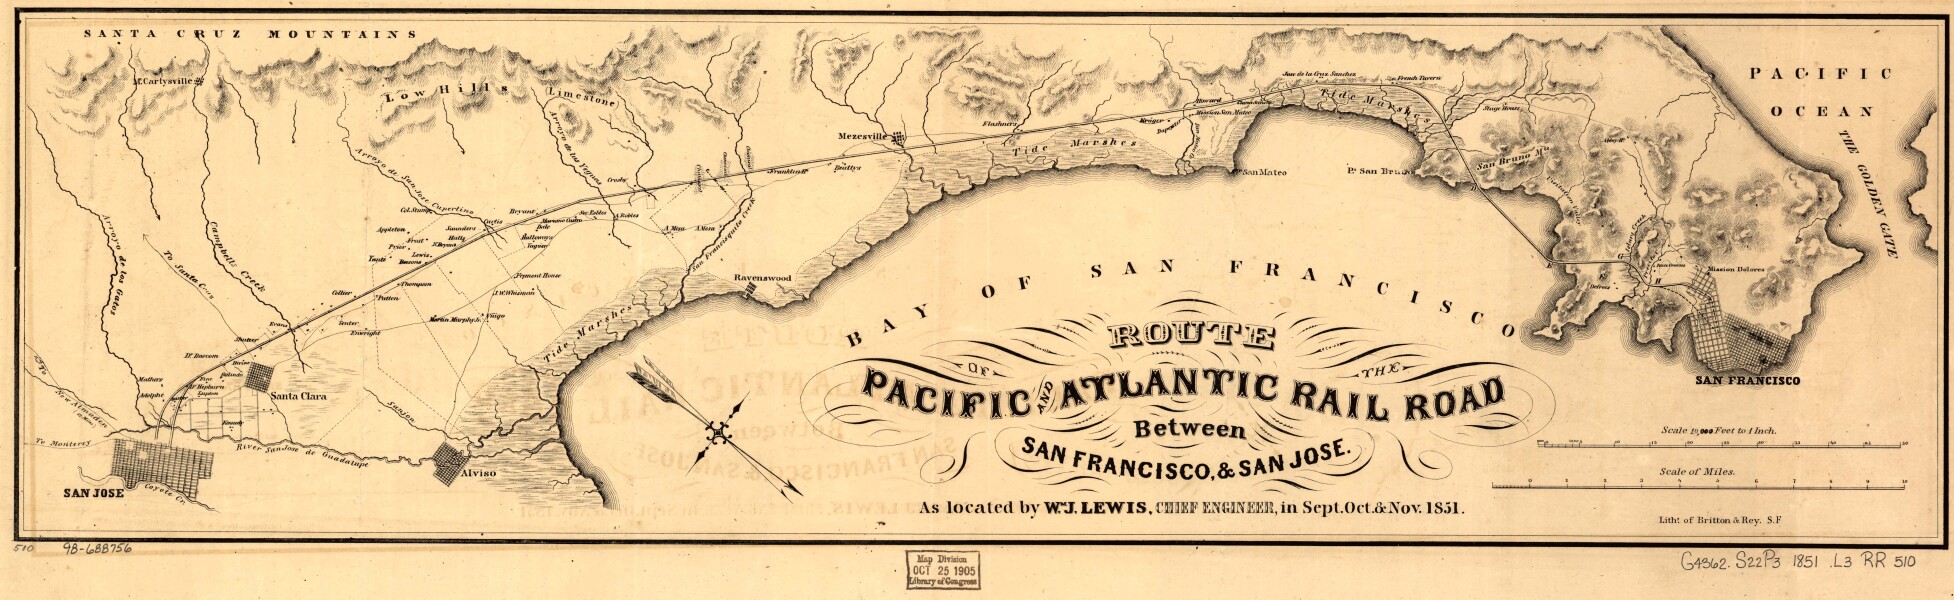 E37 - San Francisco Bay, by William J. Lewis, 1851